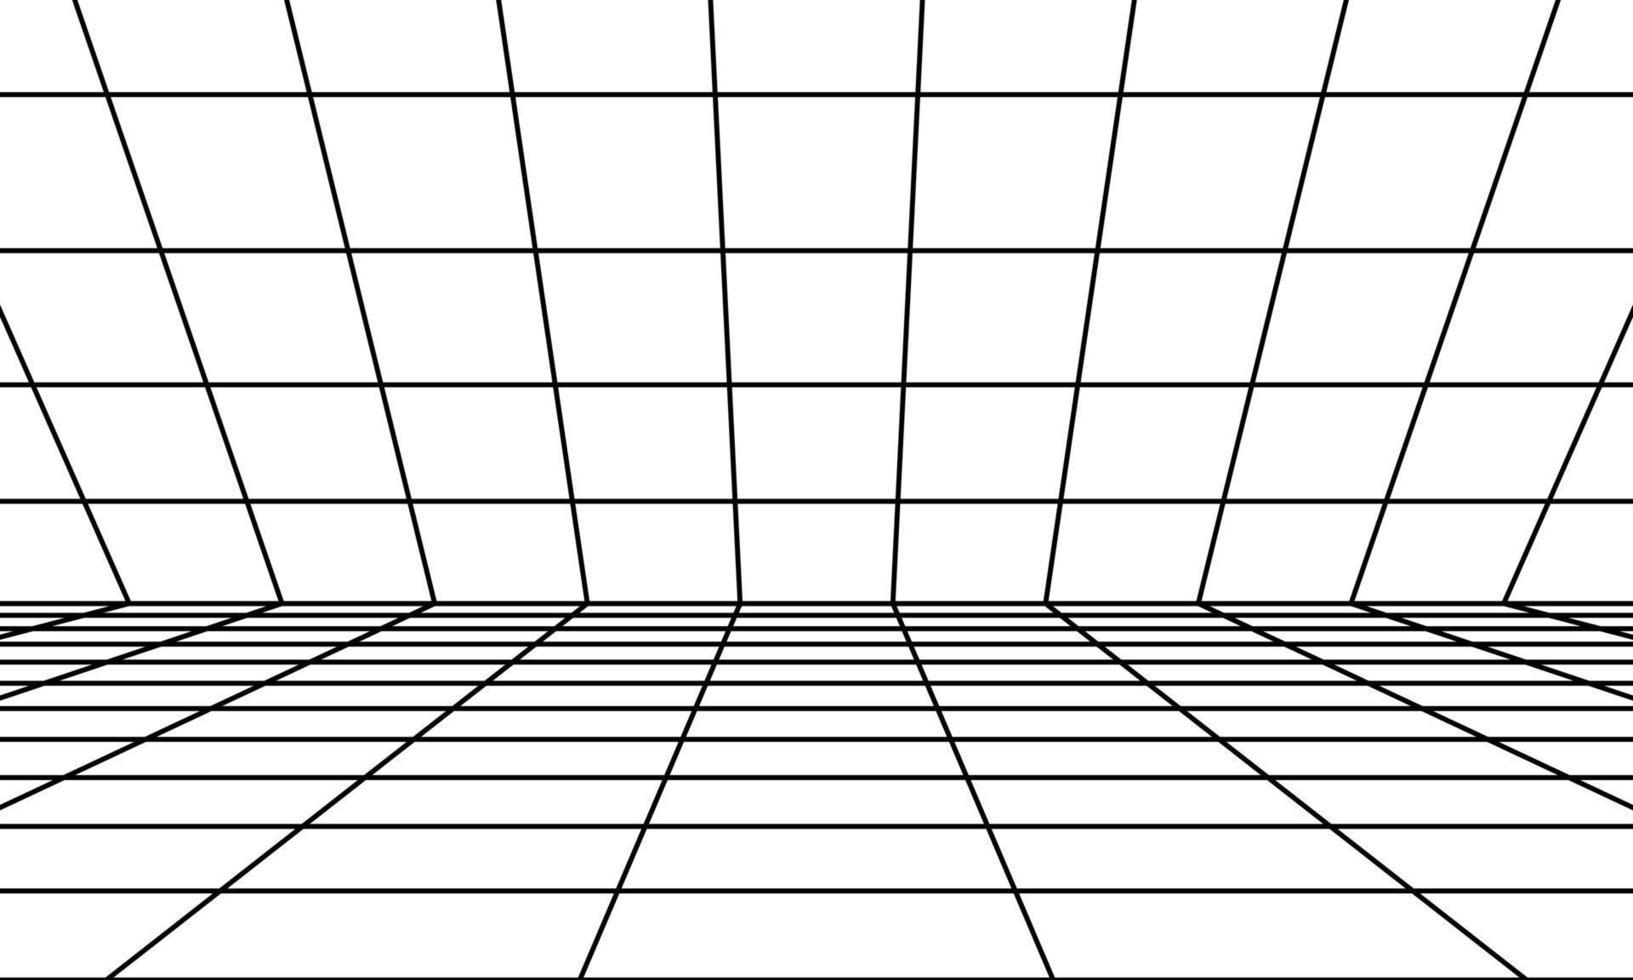 perspectief kamer met zwart rooster. 3d lineair verdieping en leeg interieur dimensie. virtueel studio wireframe ontwerp . gemakkelijk cyber ruimte kader en meetkundig plein draad vector illustratie